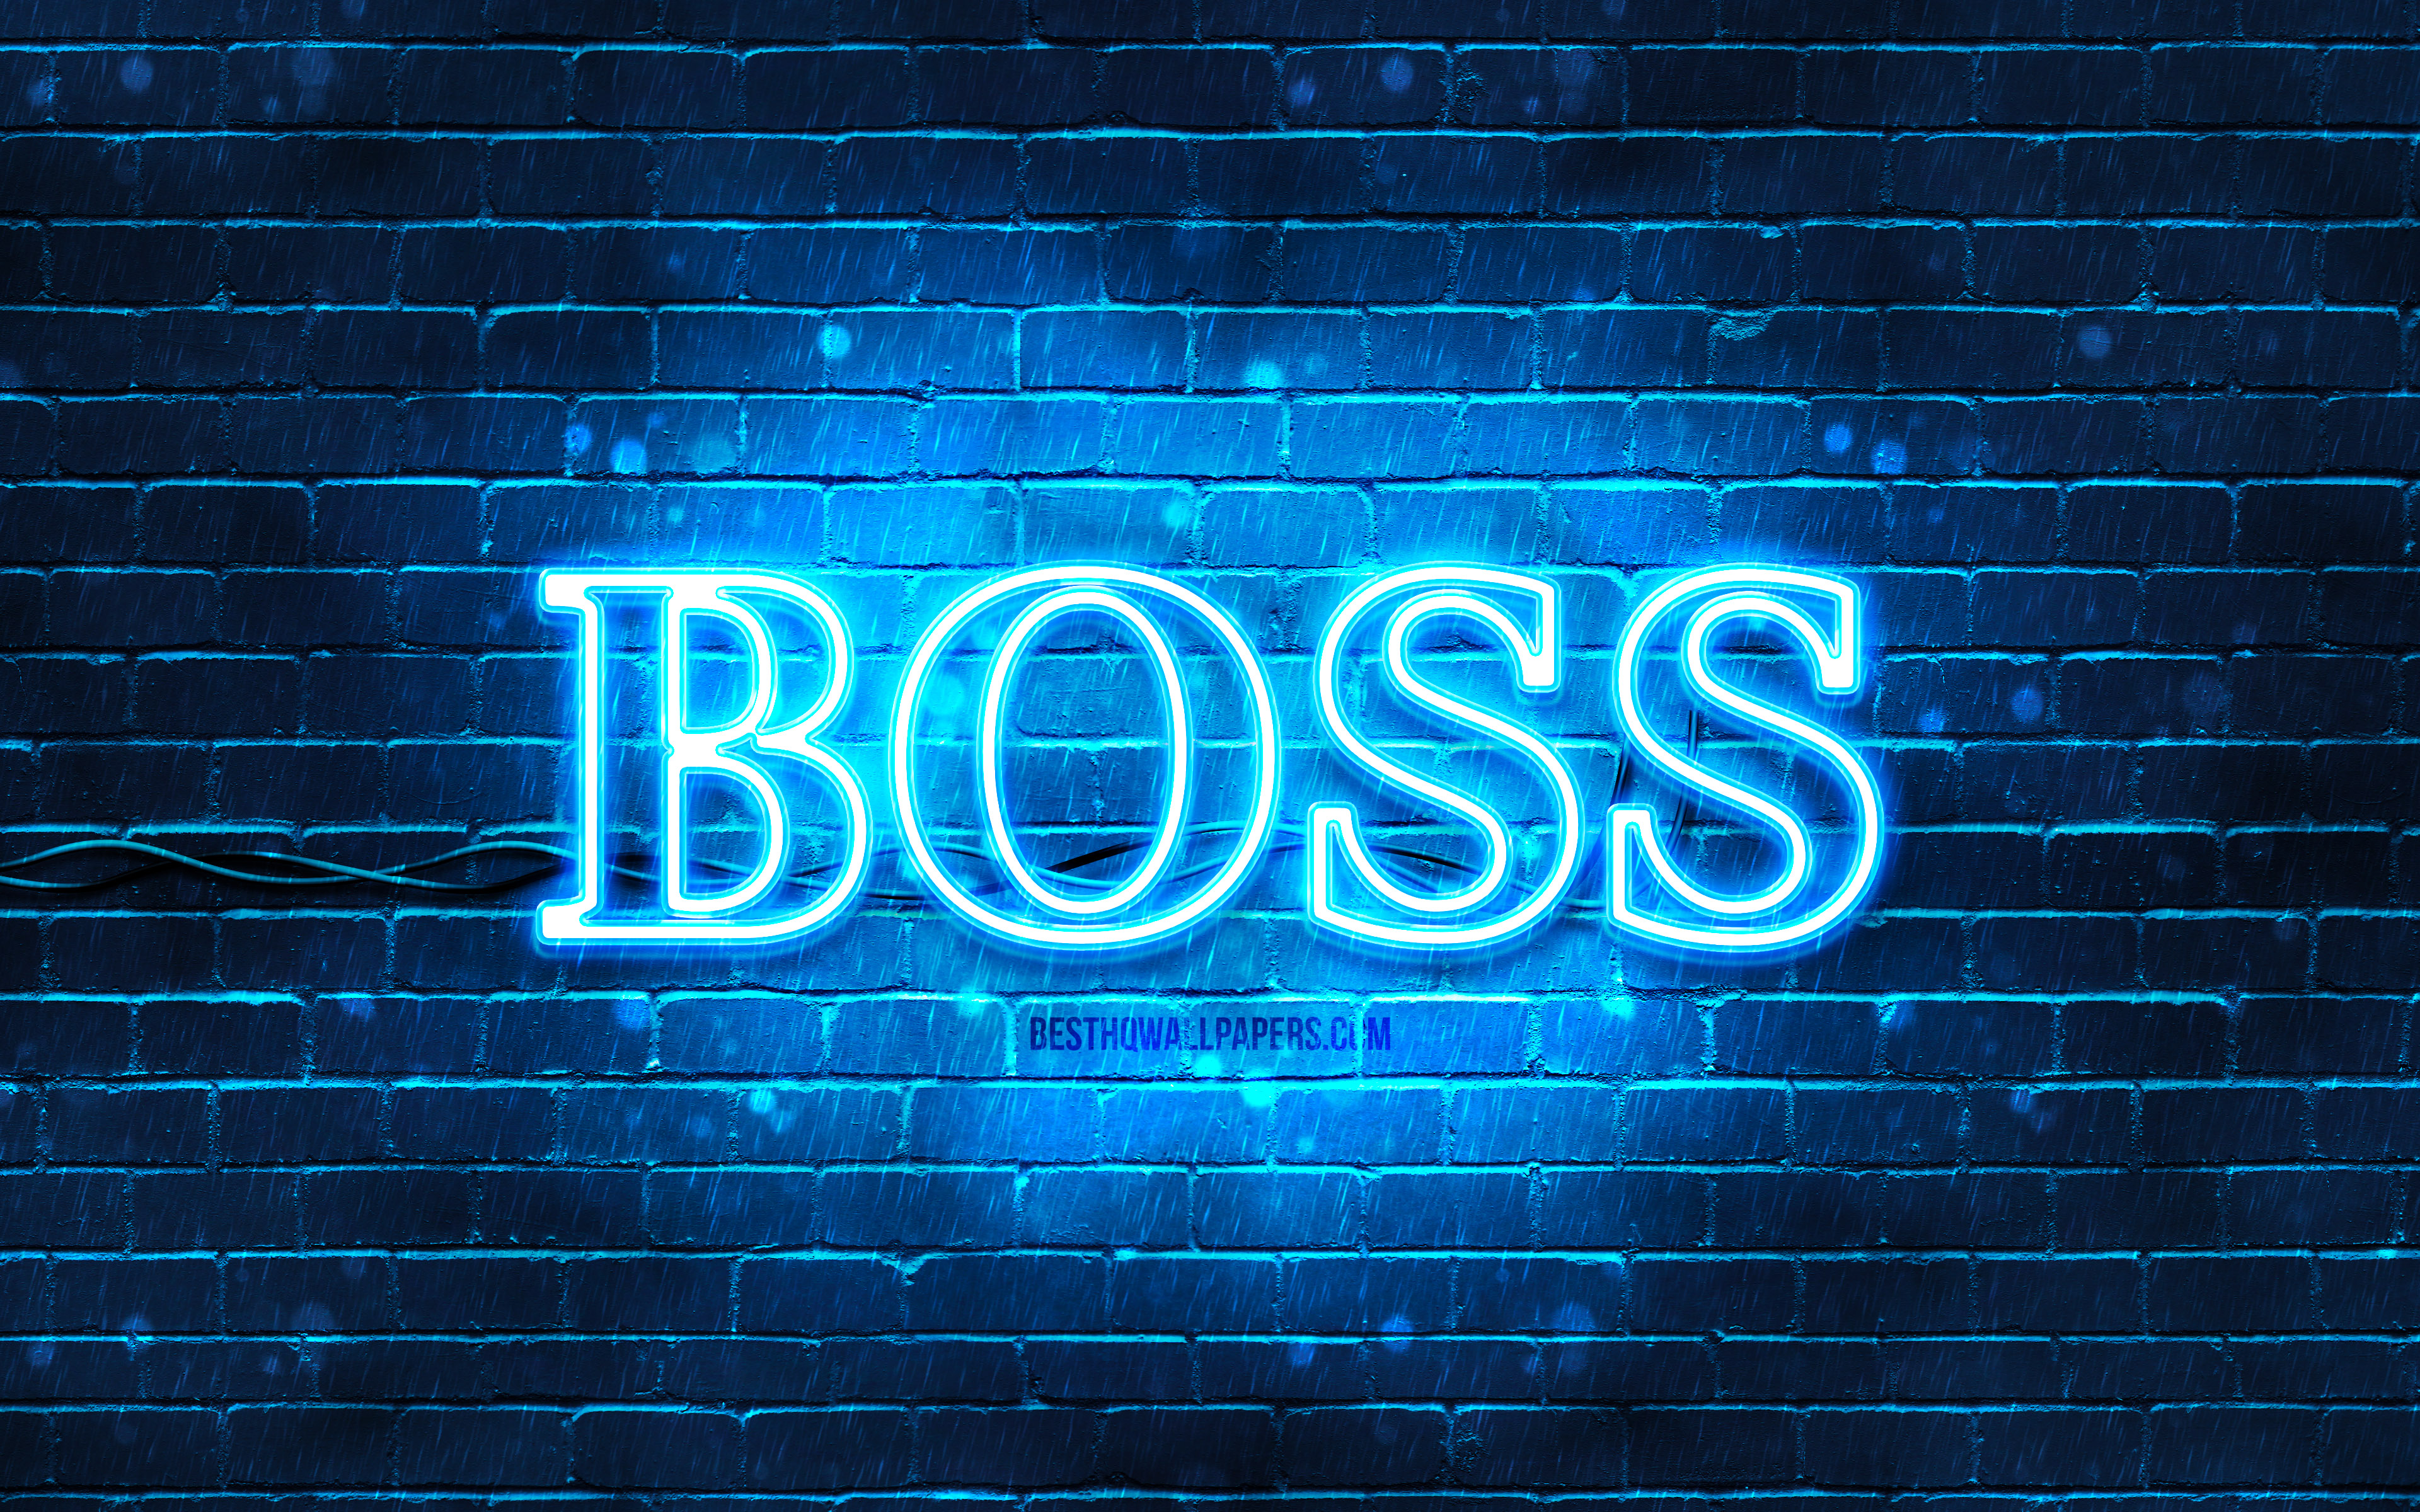 Download wallpaper Hugo Boss blue logo, 4k, blue brickwall, Hugo Boss logo, fashion brands, Hugo Boss neon logo, Hugo Boss for desktop with resolution 3840x2400. High Quality HD picture wallpaper